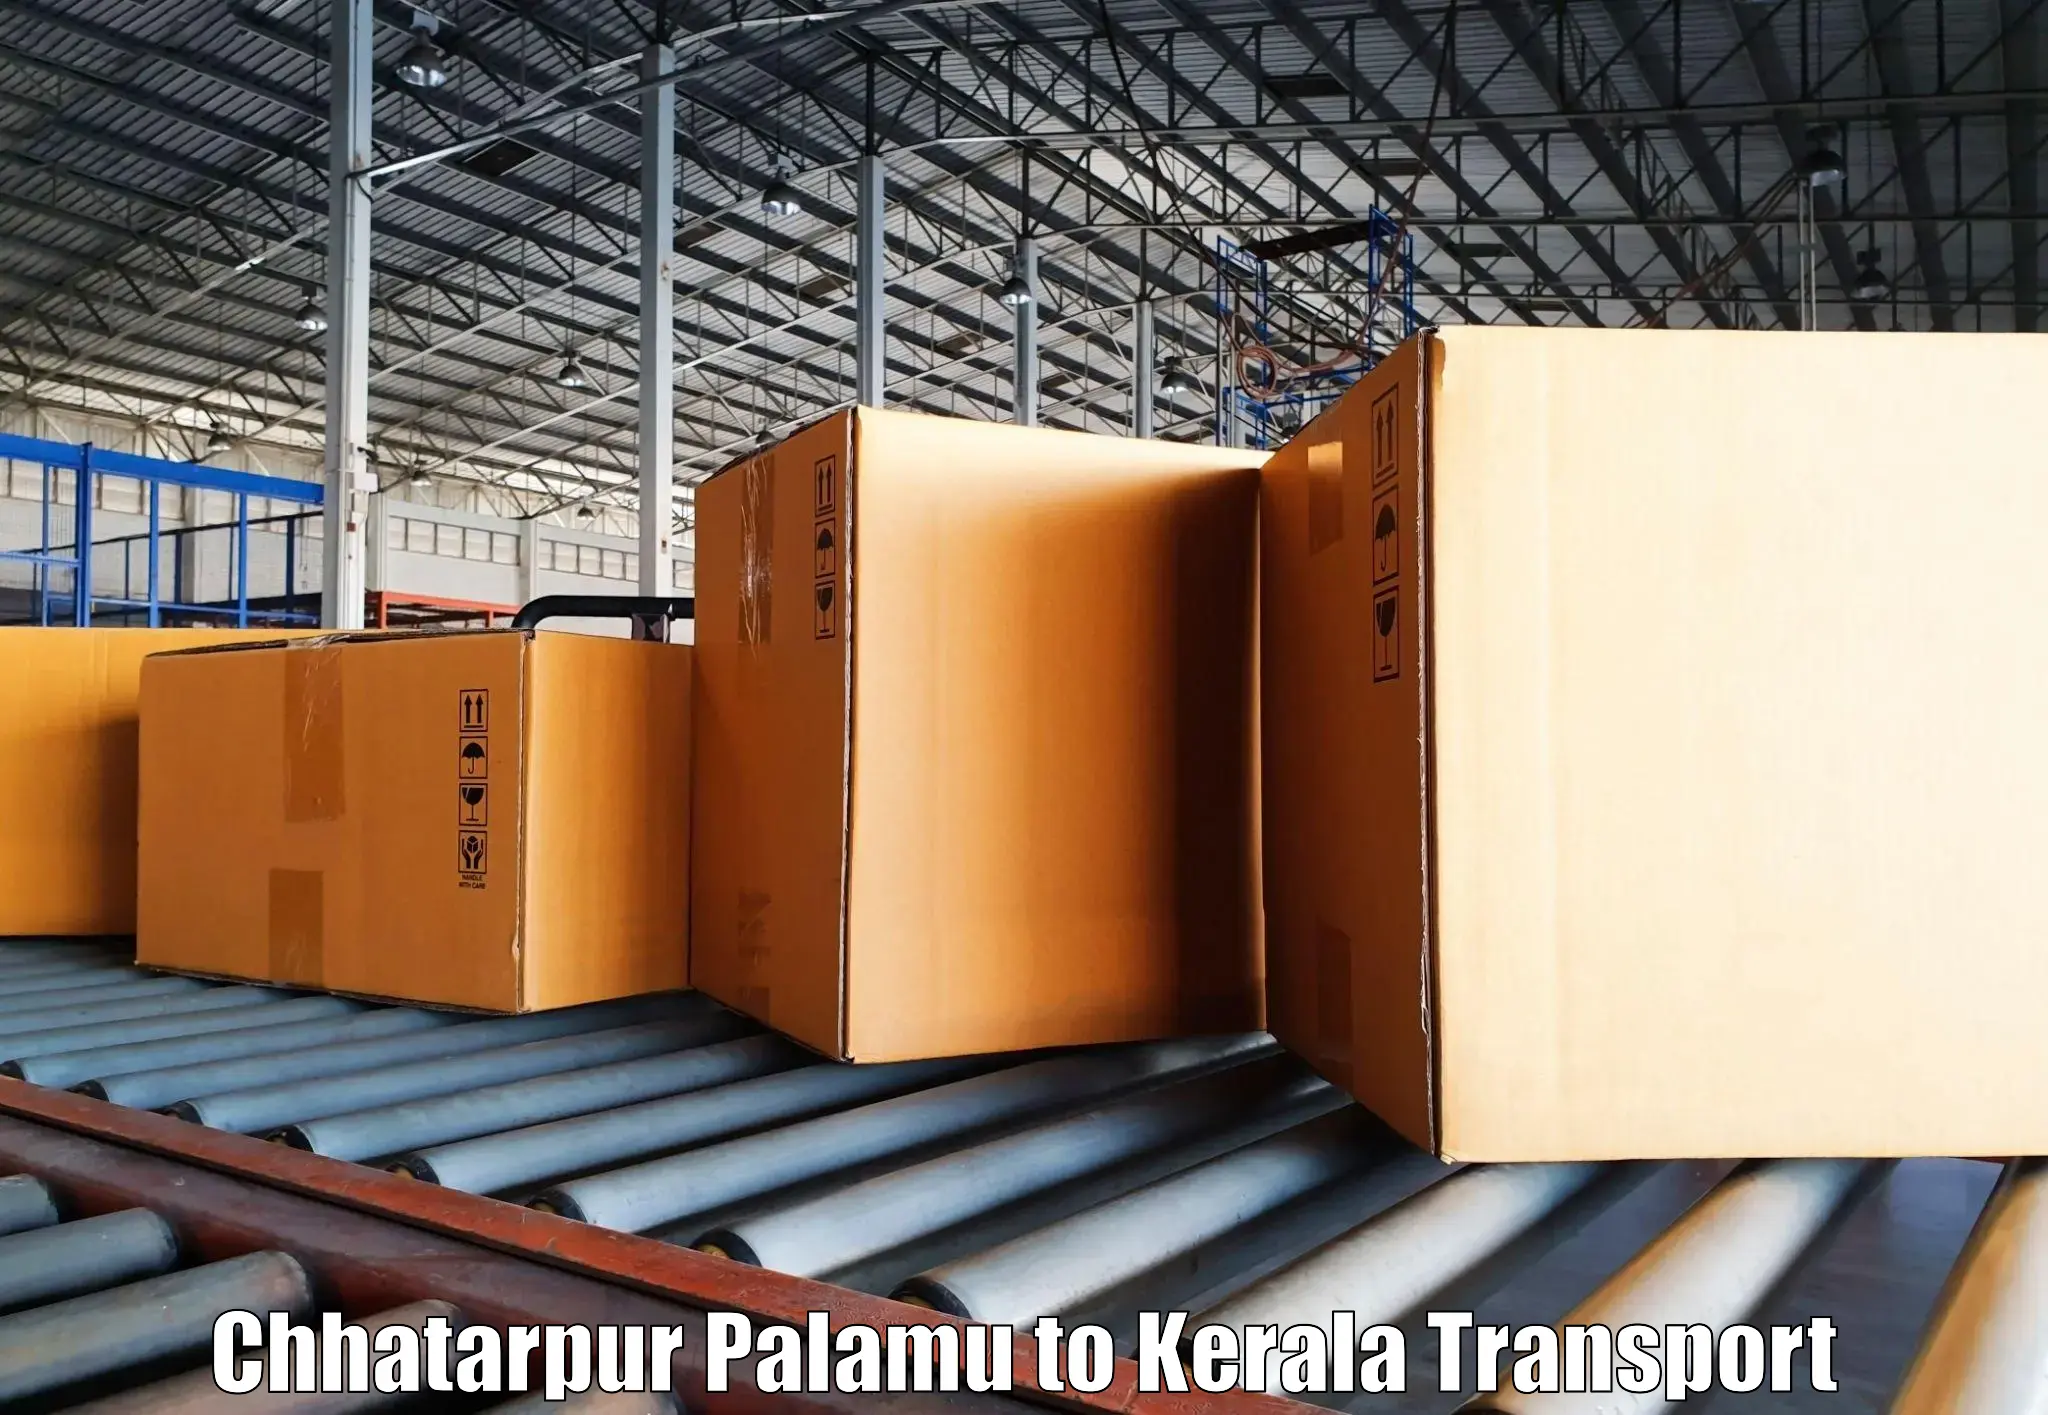 Transport in sharing Chhatarpur Palamu to Pangodu